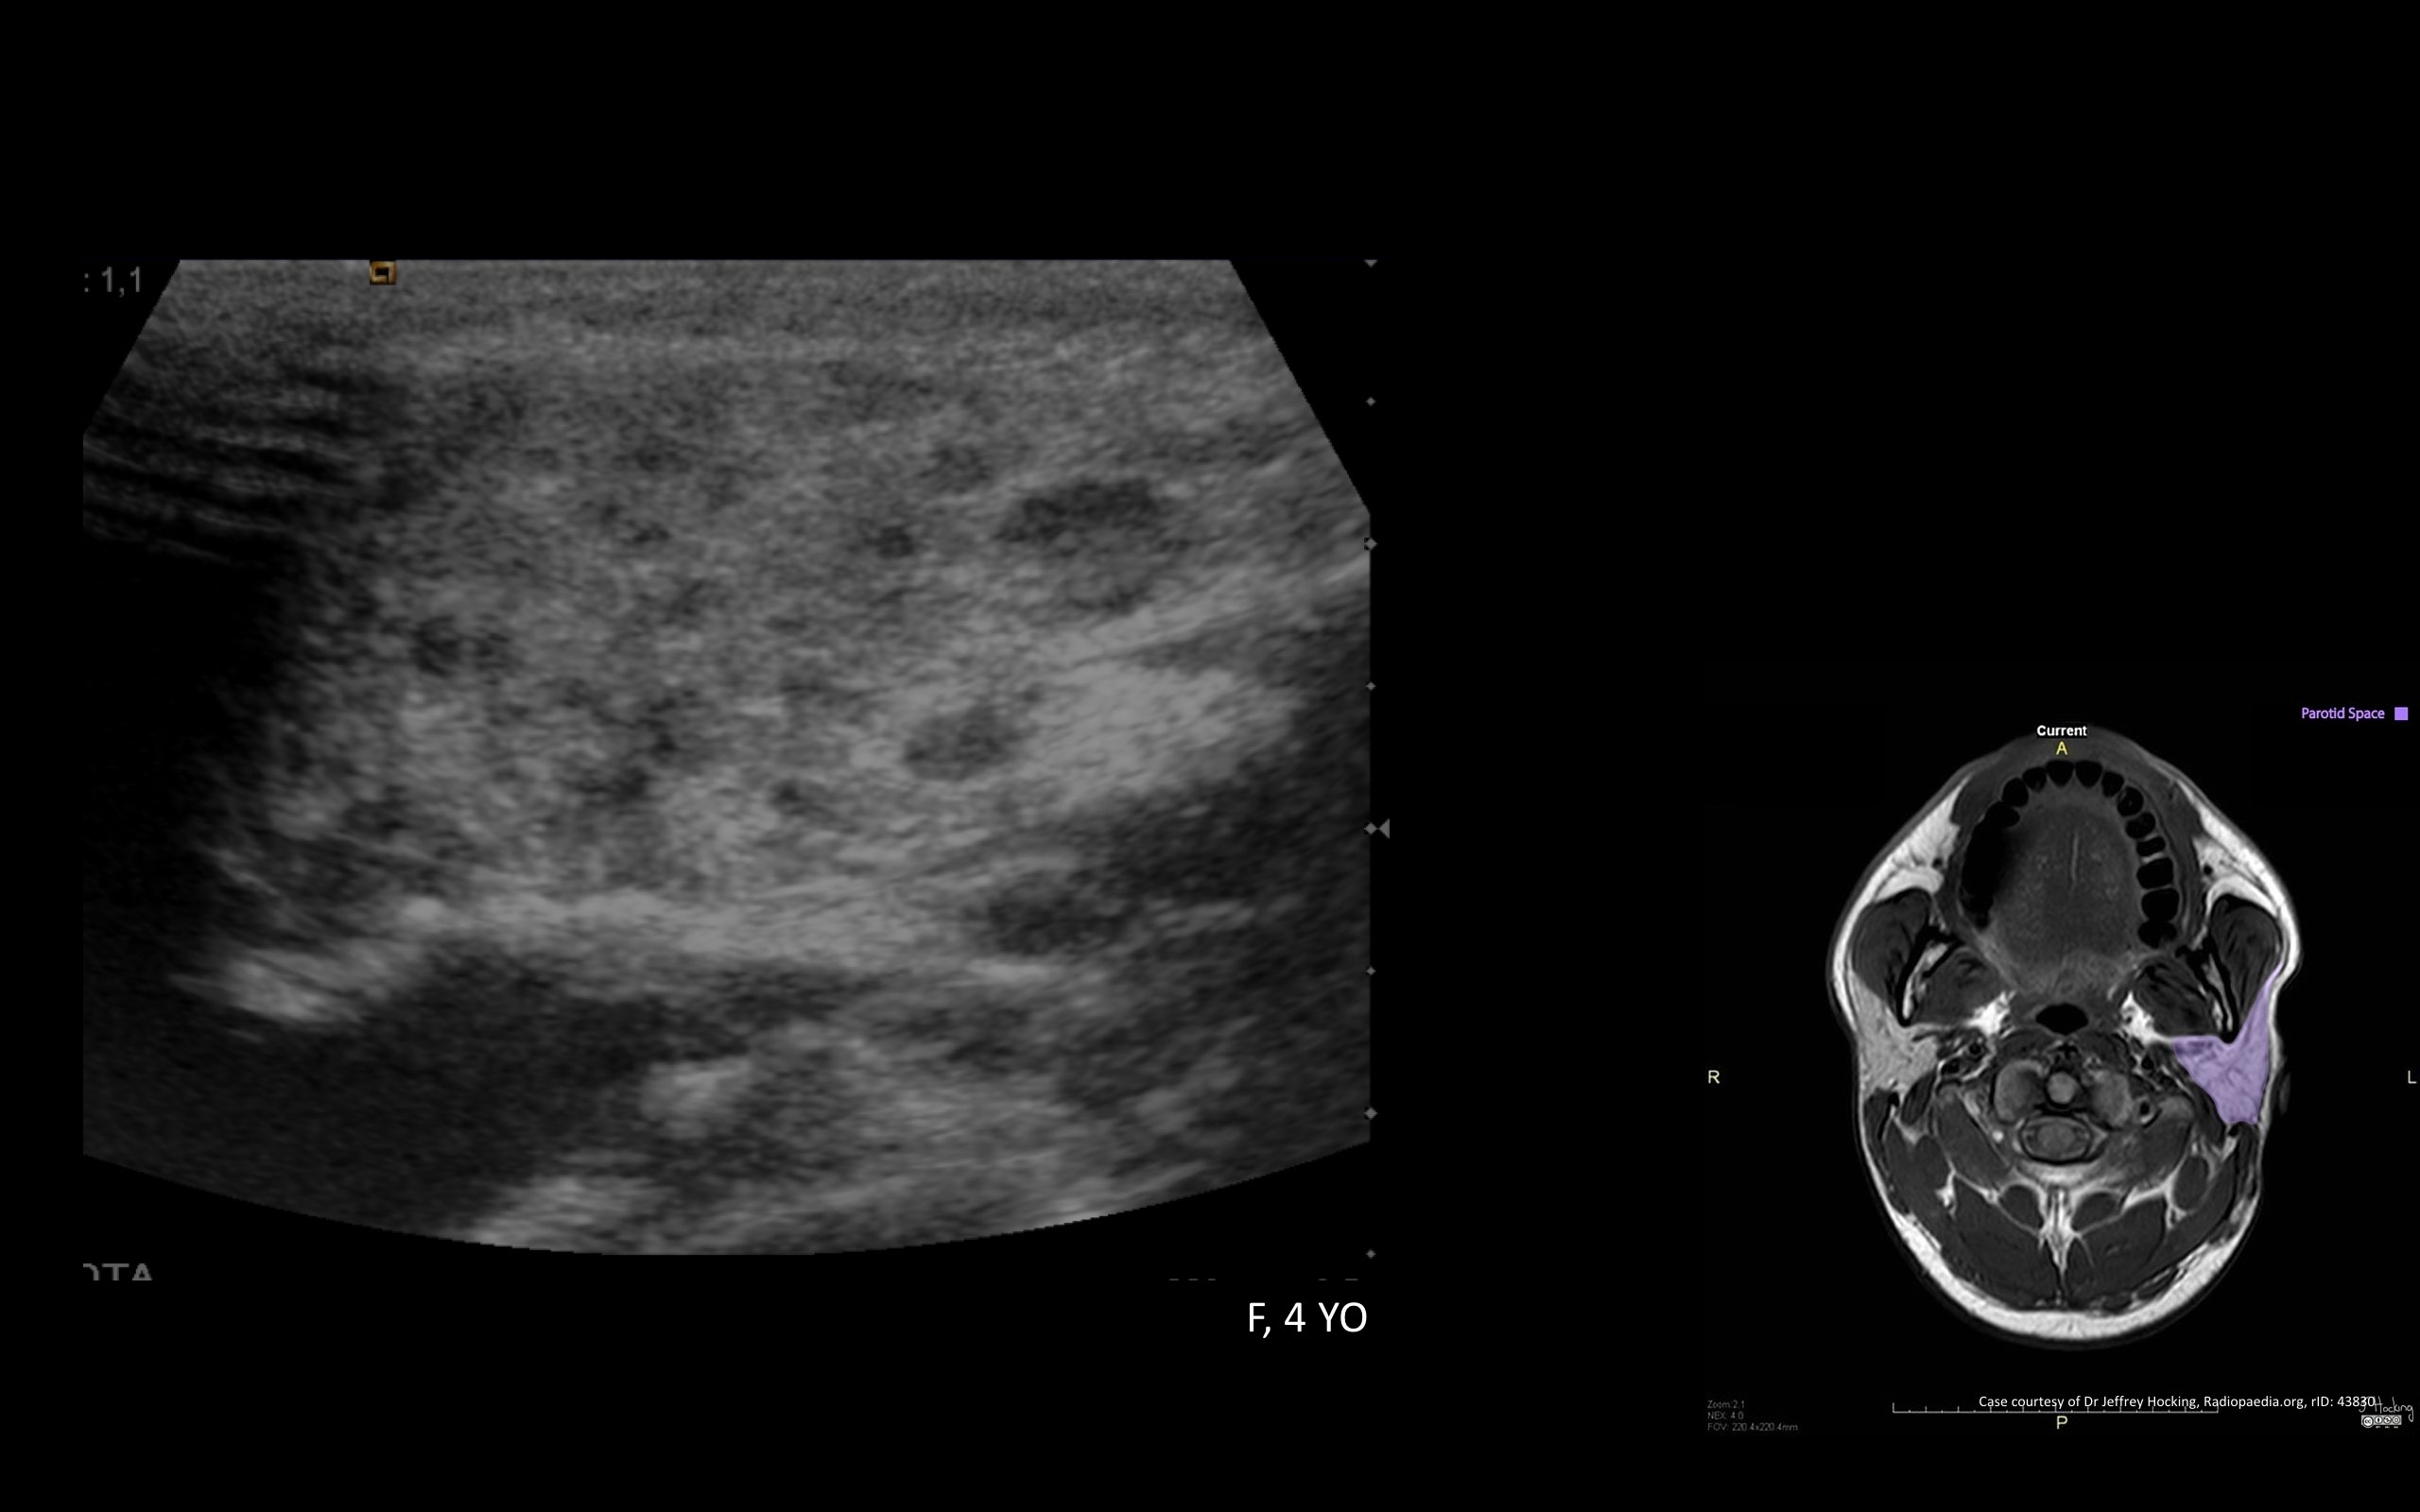 parotid gland swelling ultrasound